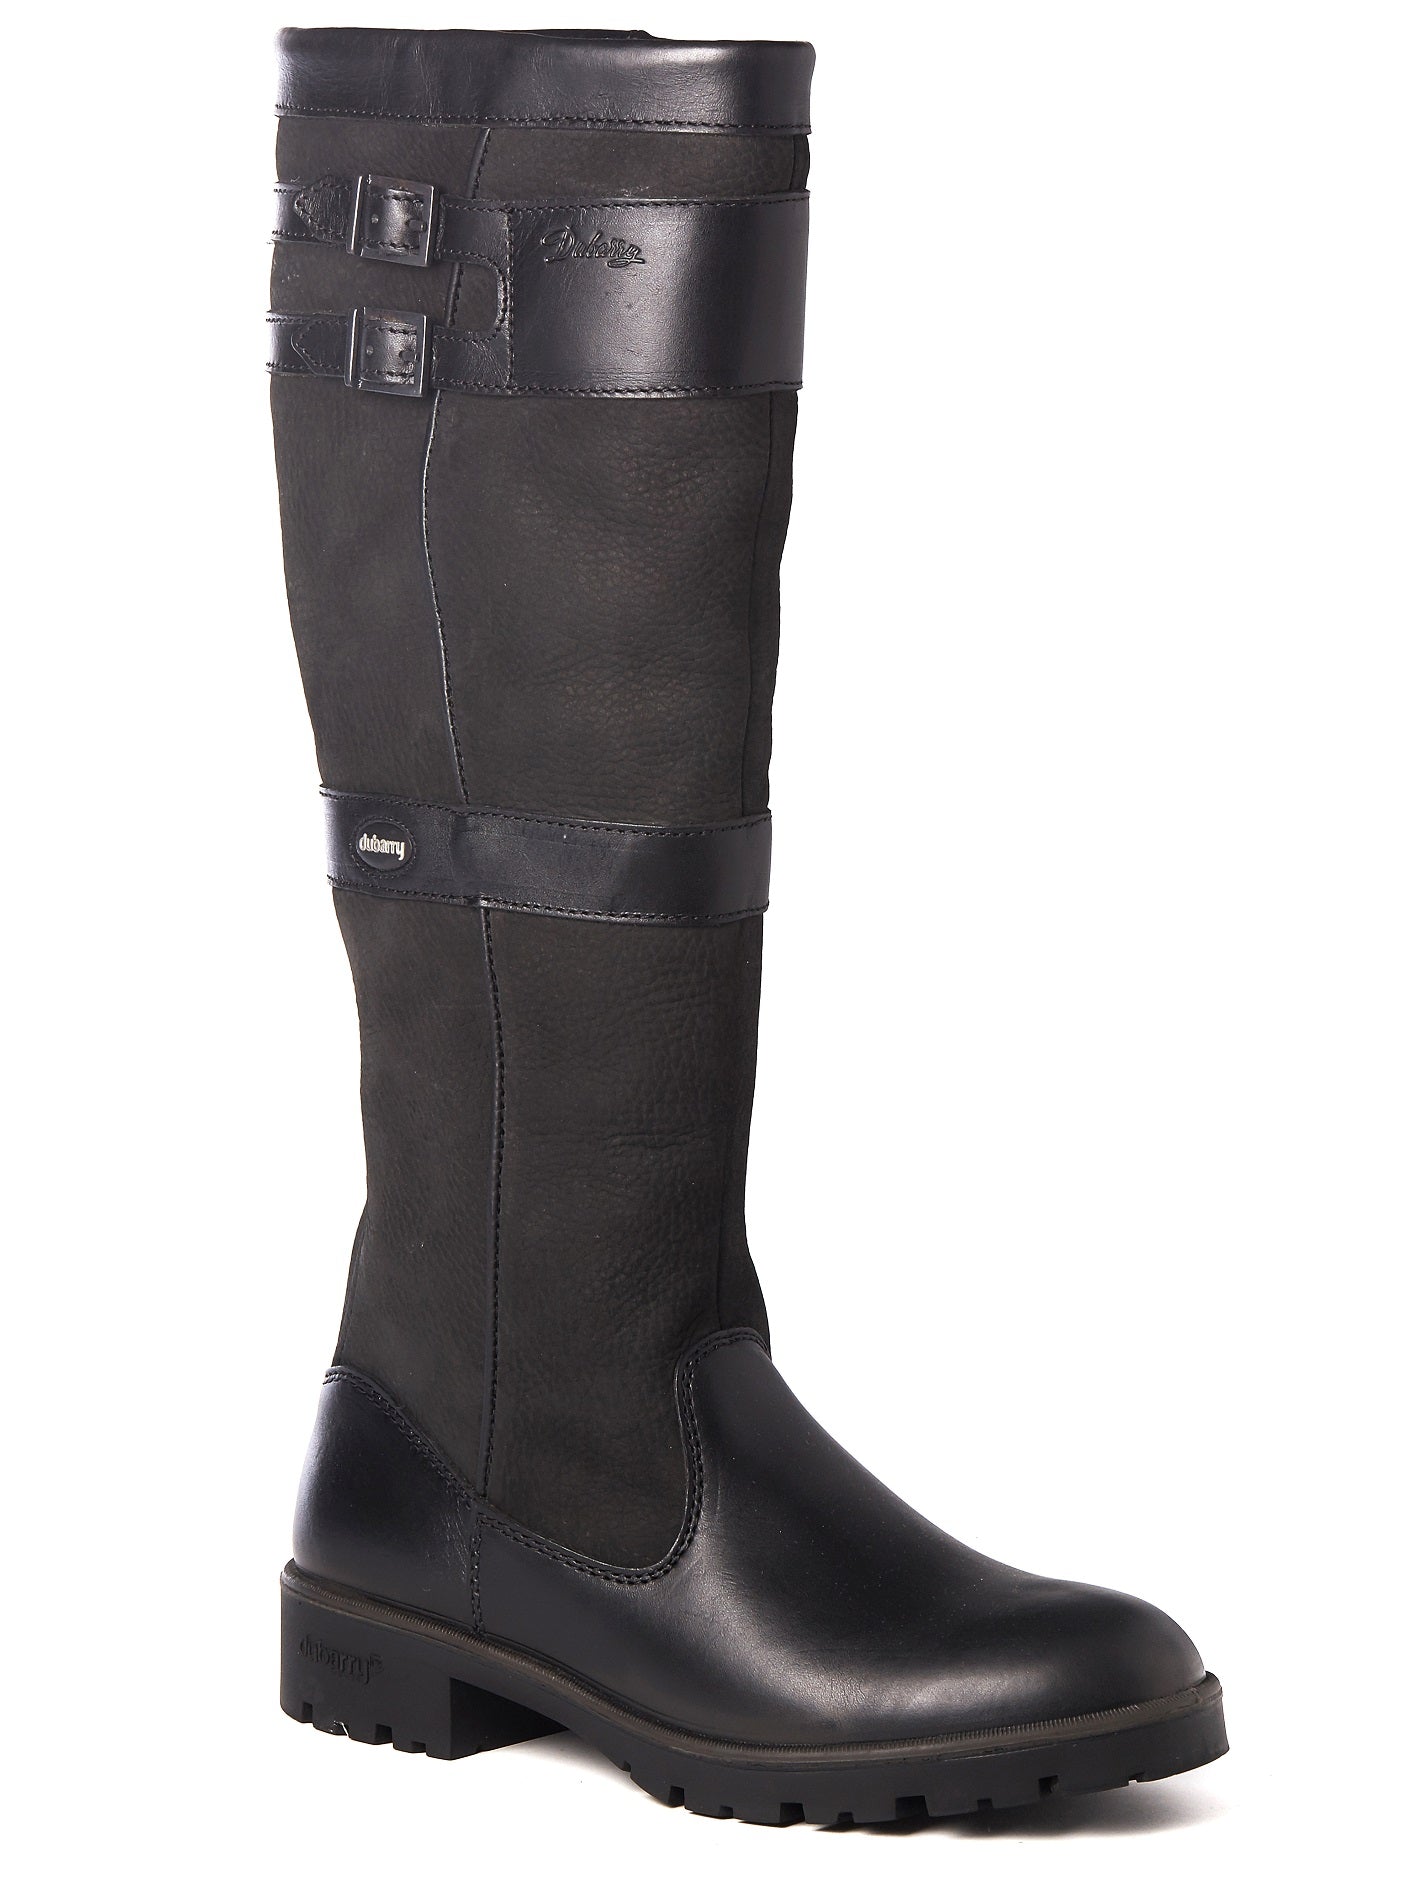 Dubarry Longford Boots - Ladies Waterproof Gore-Tex Leather - Black